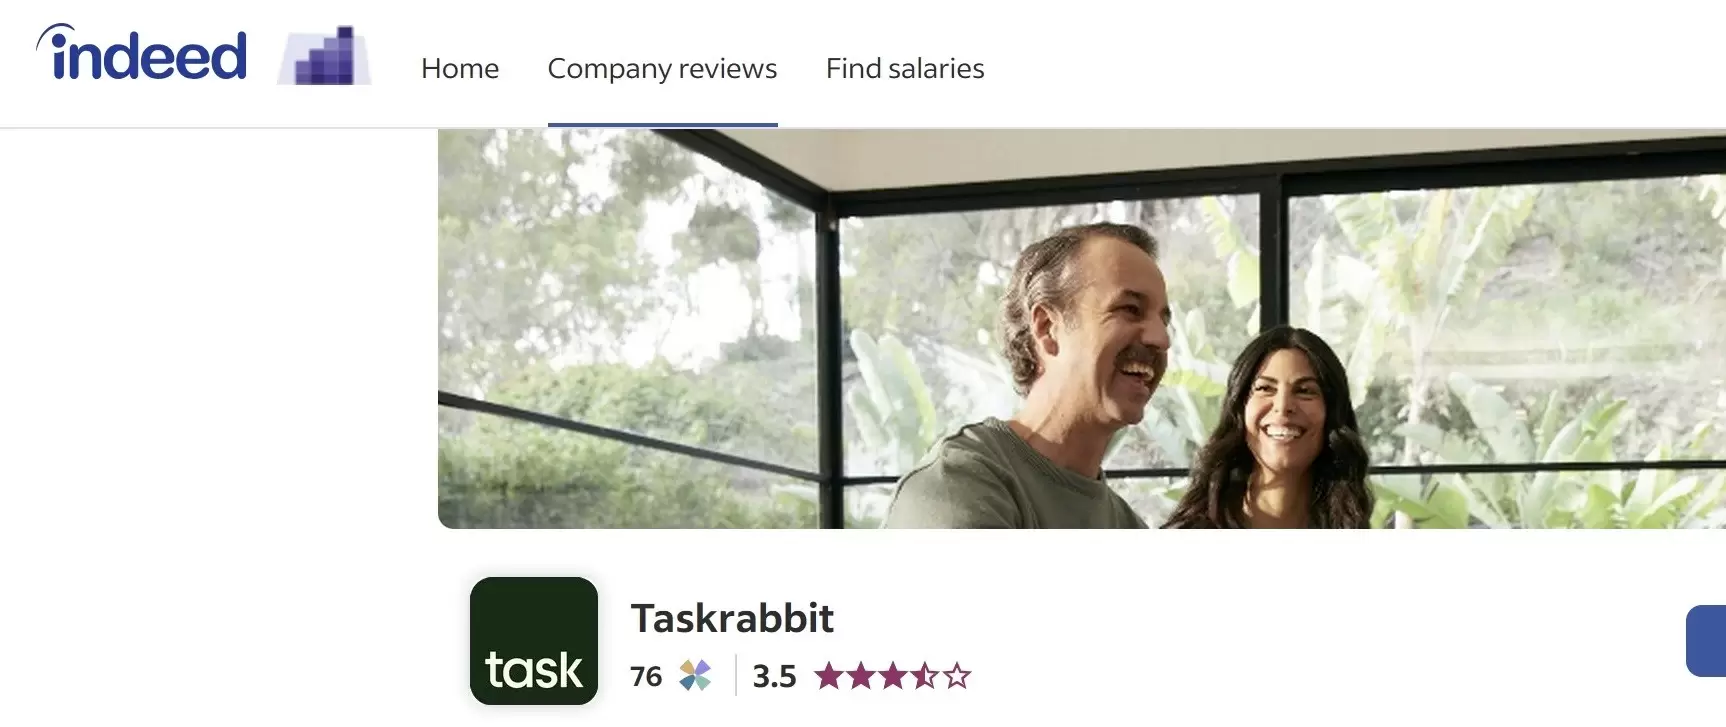 Taskrabbit reviews on Indeed